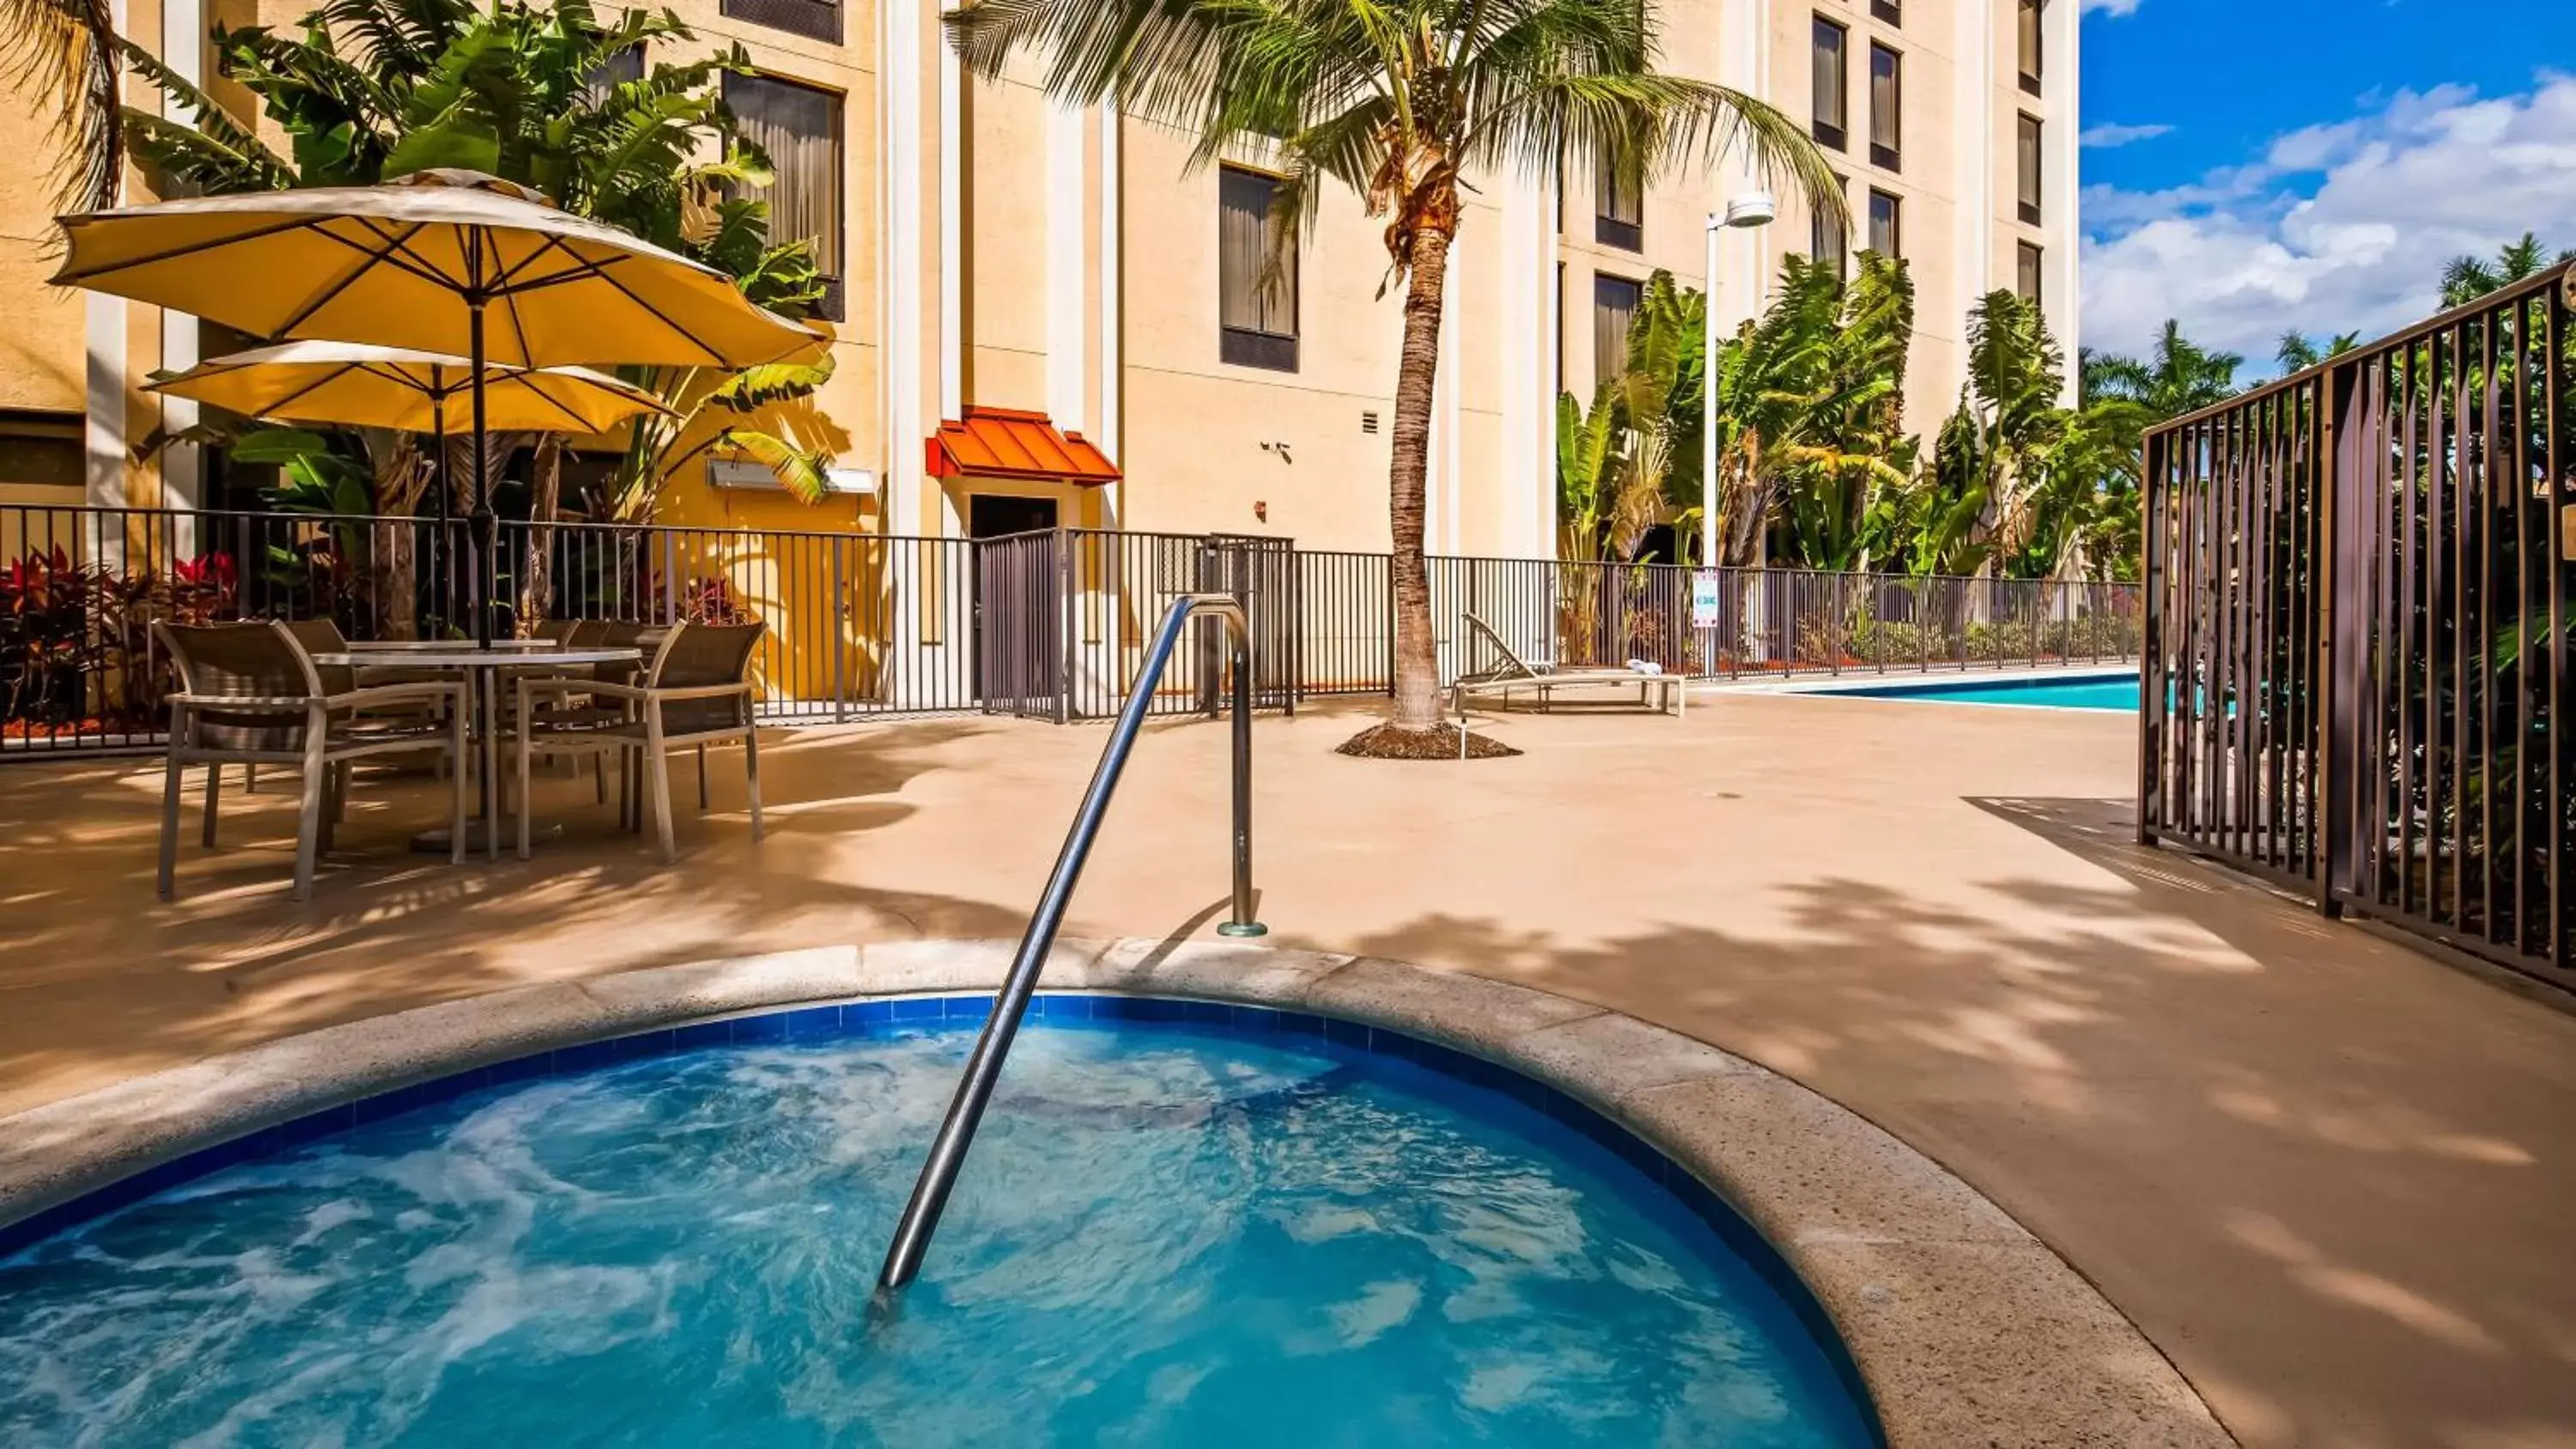 On site, Swimming Pool in Best Western Plus Kendall Hotel & Suites